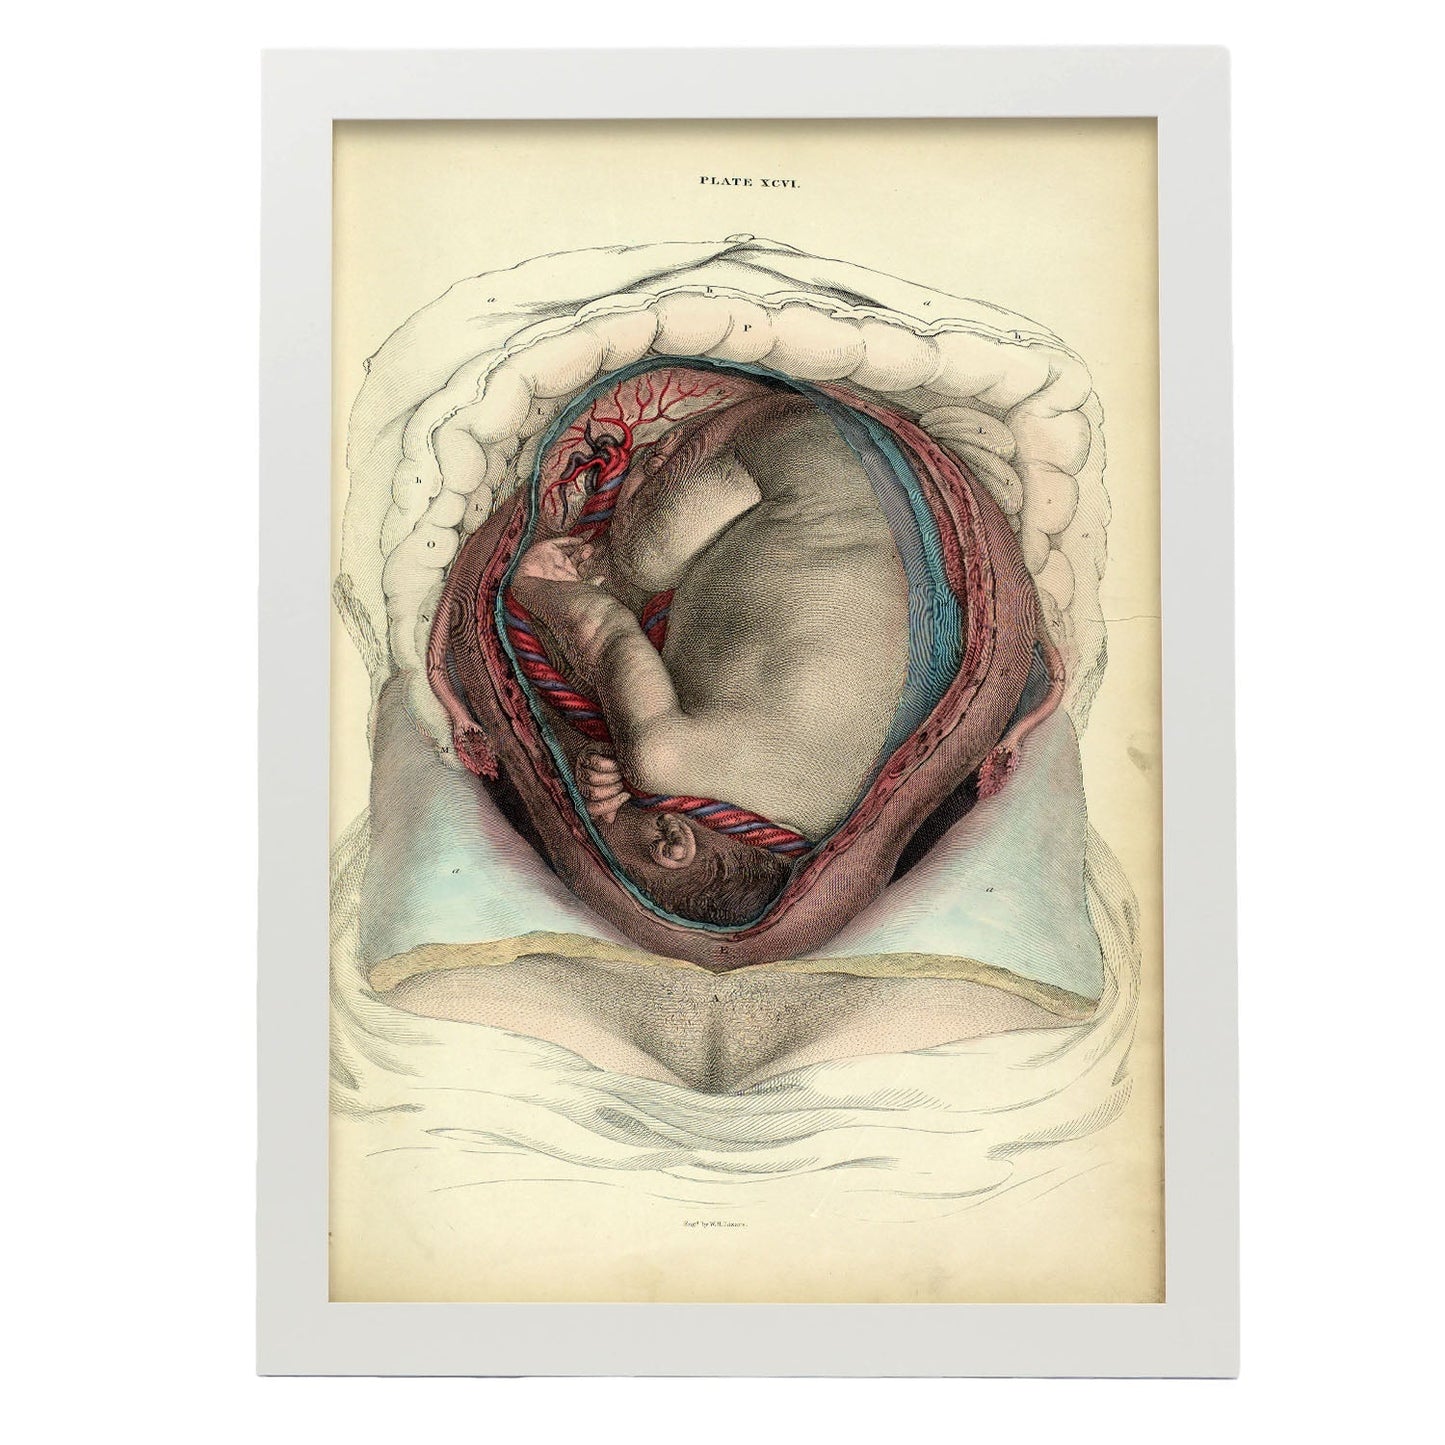 Gravid uterus with fetus-Artwork-Nacnic-A3-Marco Blanco-Nacnic Estudio SL